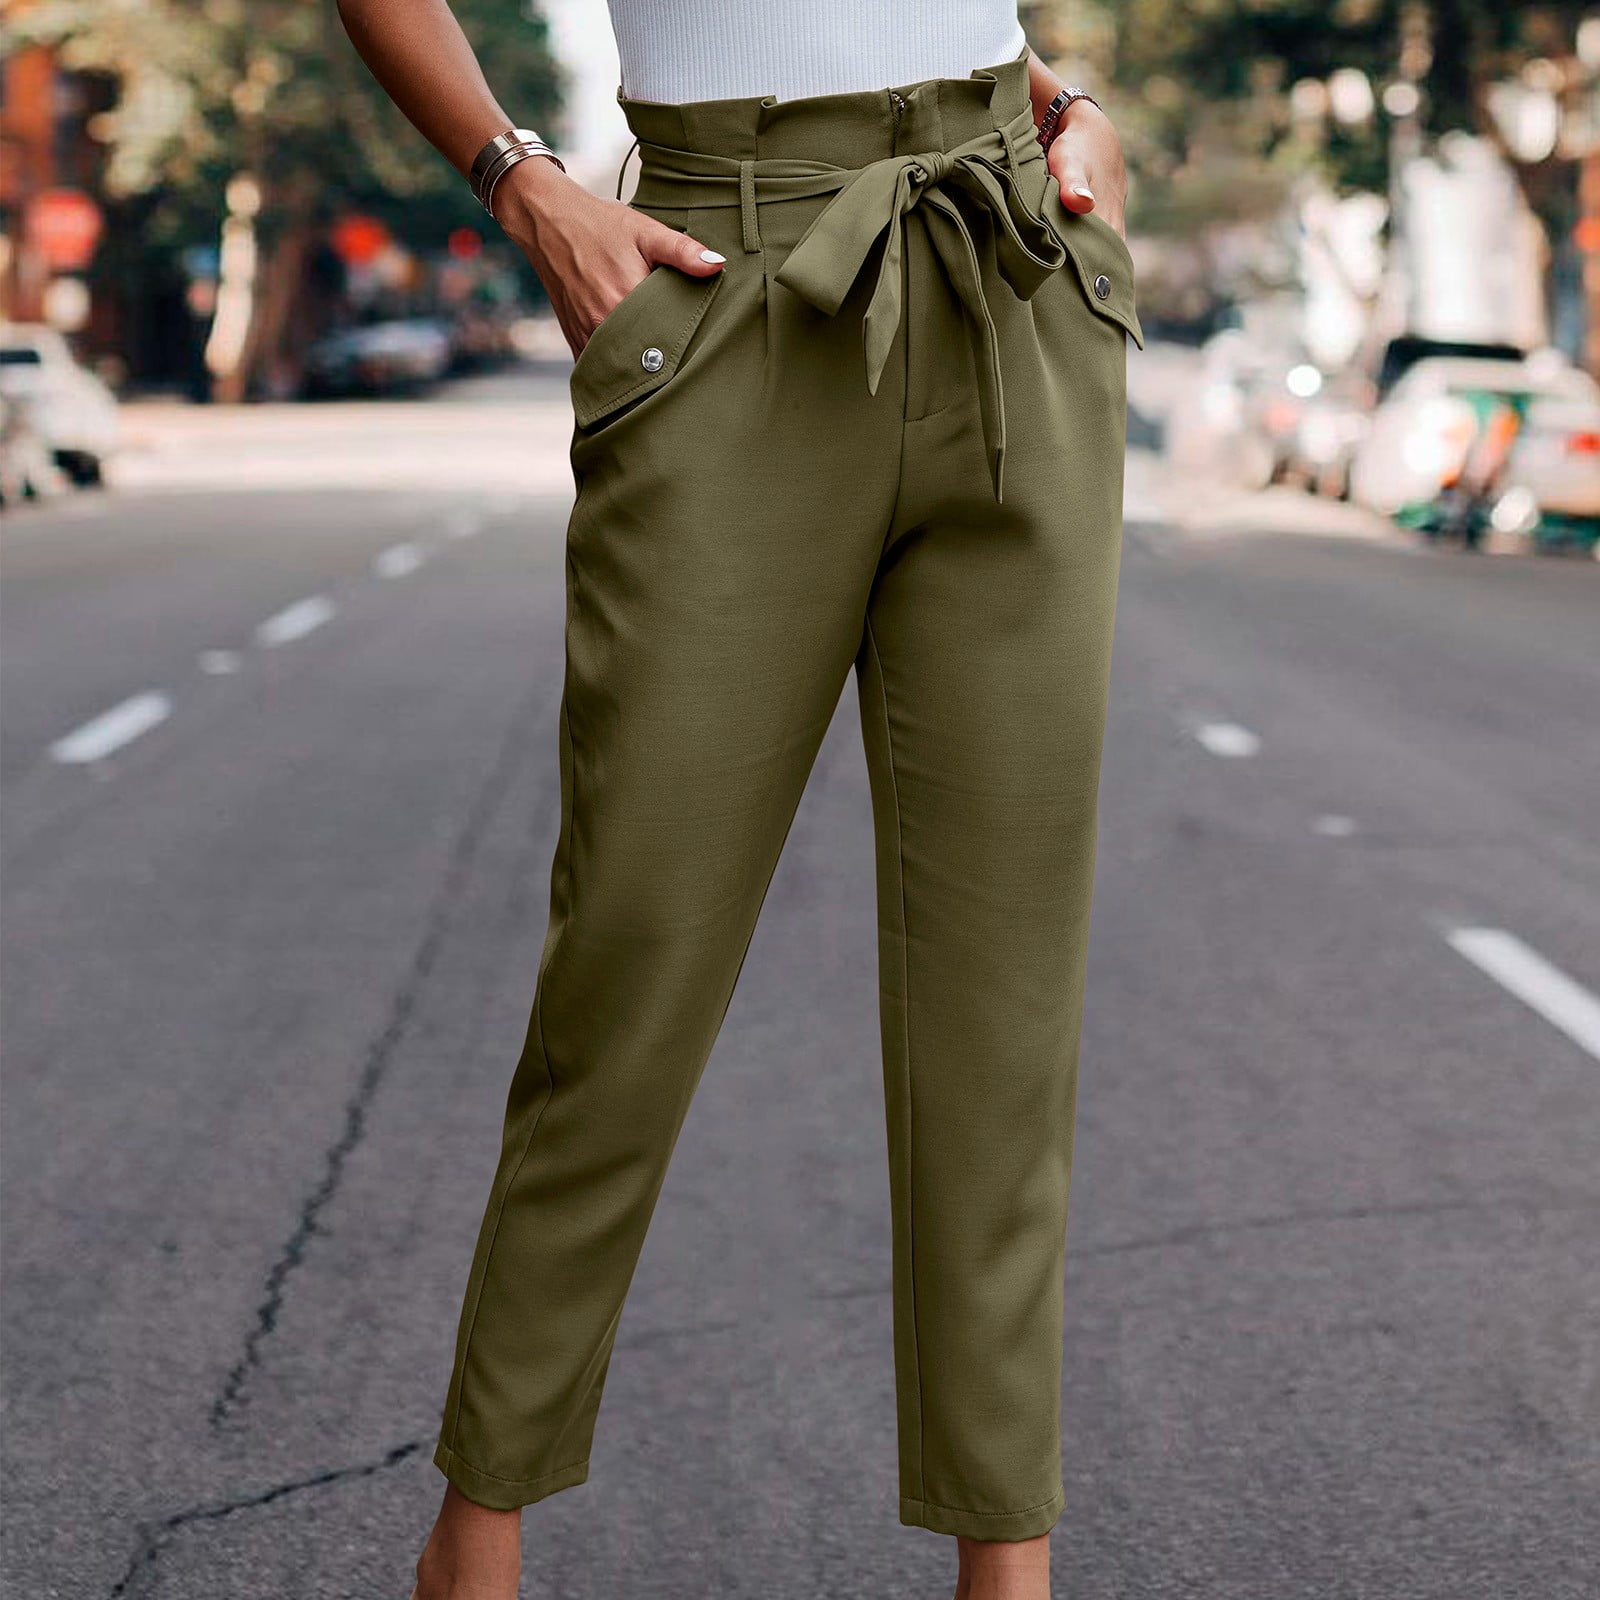 Women Office Elegant Straight Trousers Elastic Waist Wide Leg Jeans Fashion  Casual Work Pants price in UAE  Amazon UAE  kanbkam